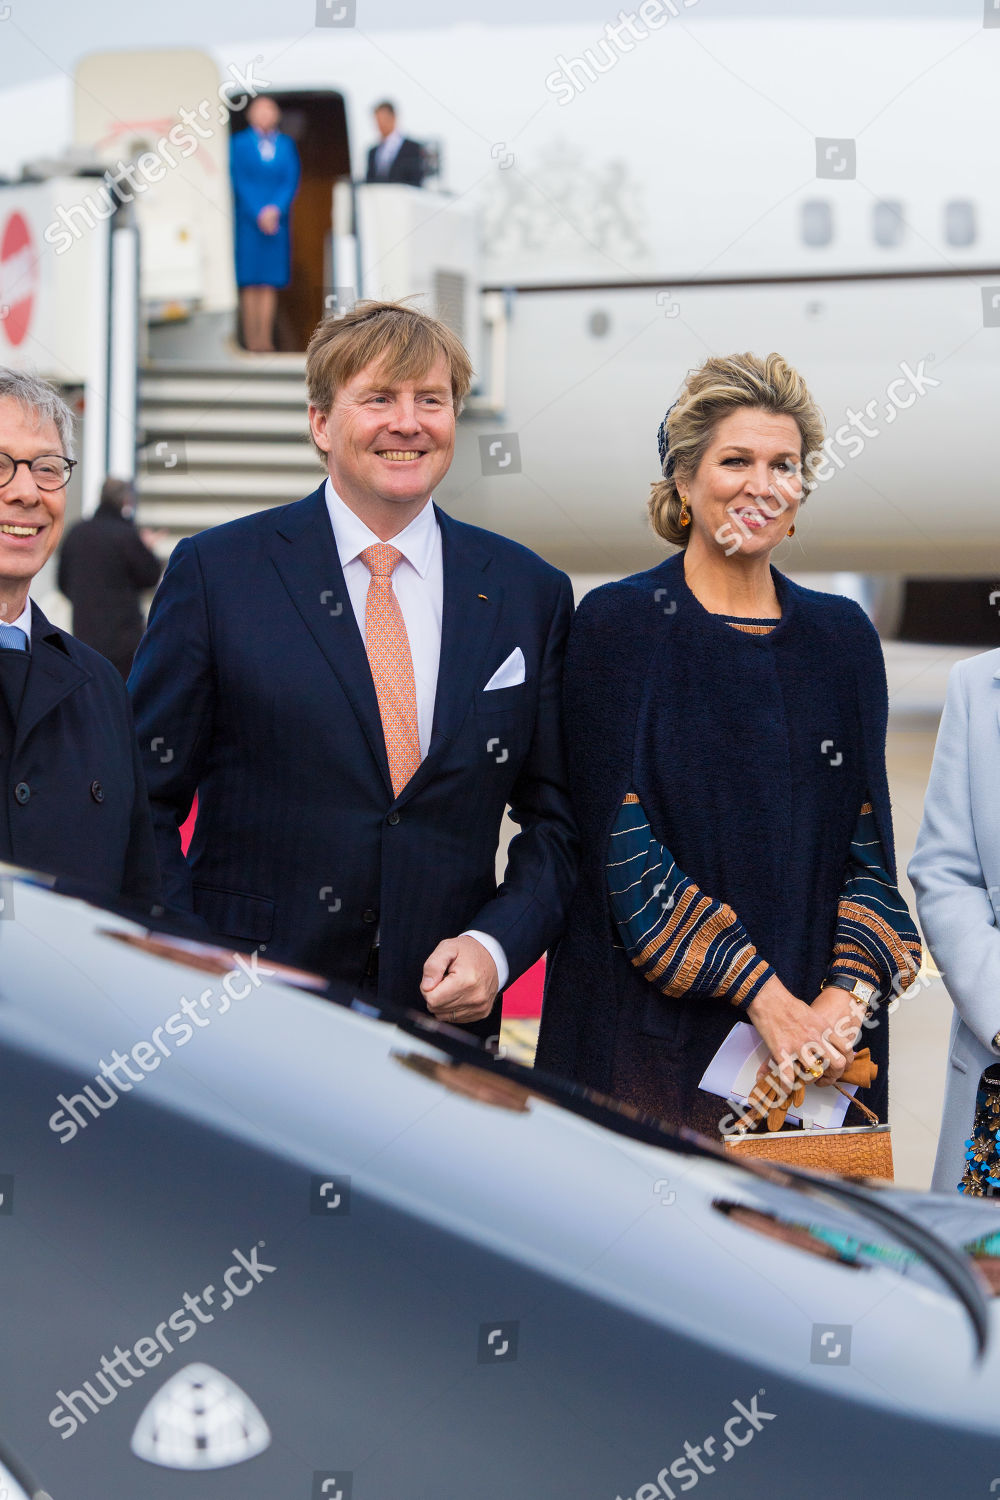 dutch-royals-visit-to-bremen-germany-shutterstock-editorial-10143597a.jpg